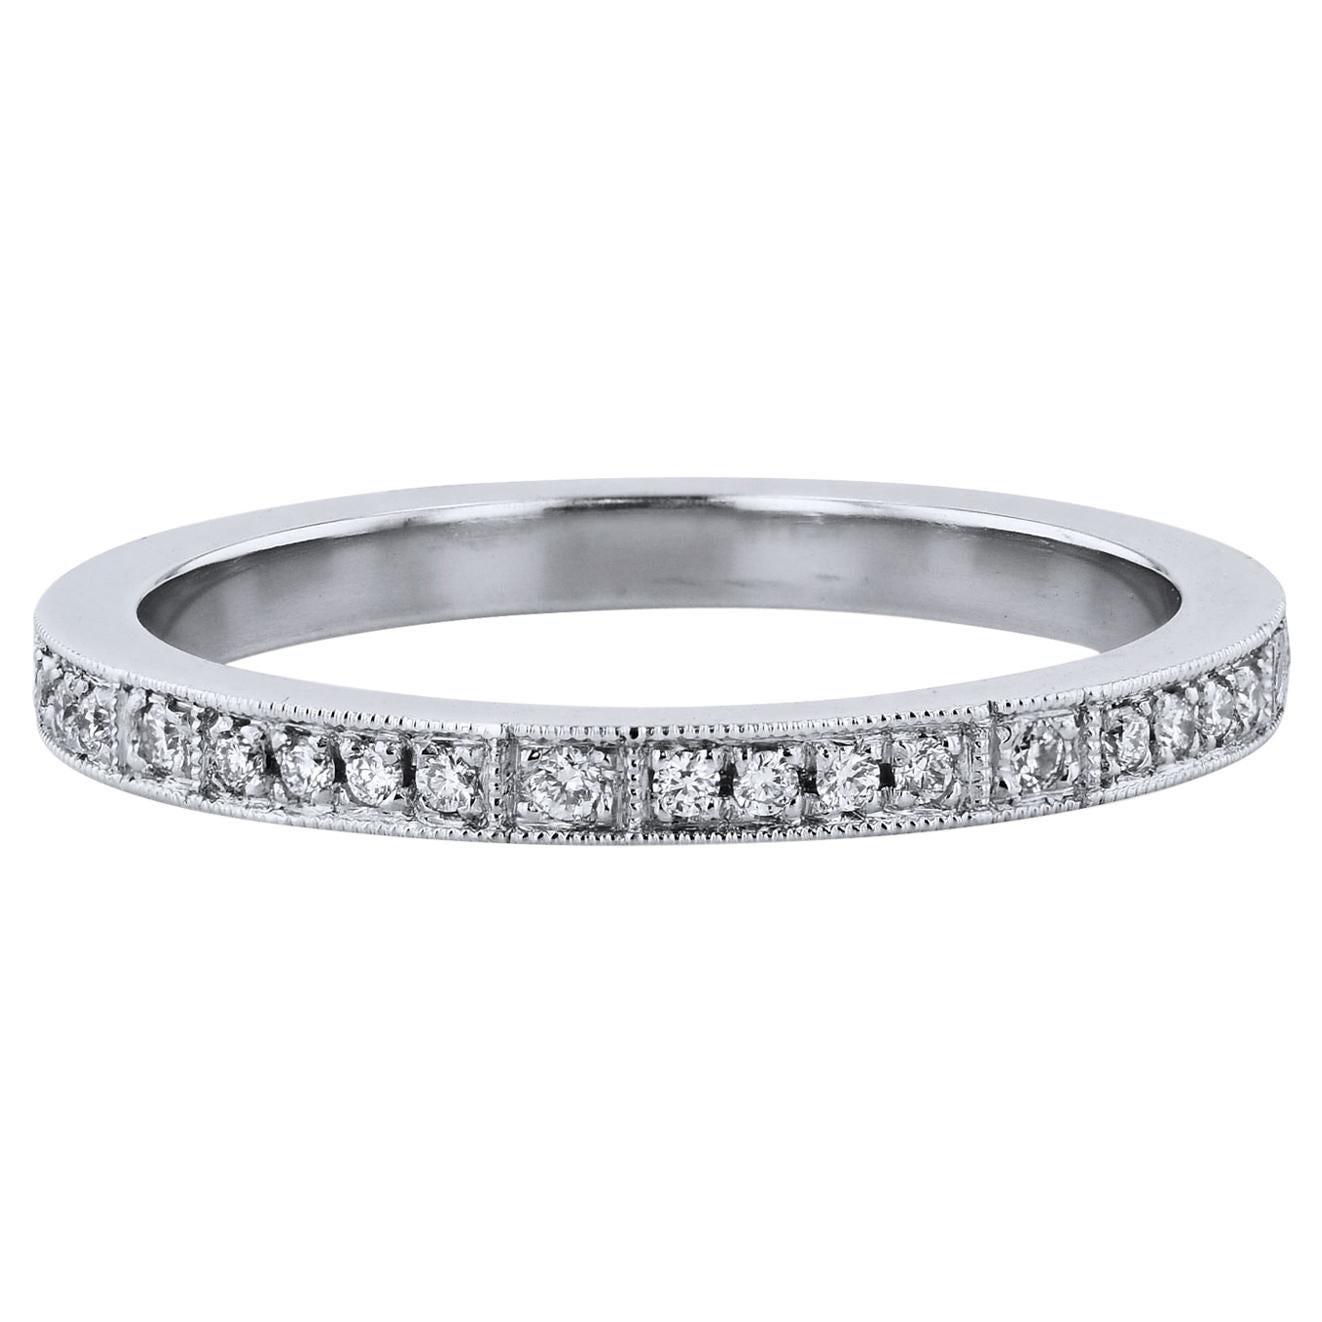 0.19 Carat Round Diamond Pave Platinum Eternity Band Ring Handmade by H&H Jewels